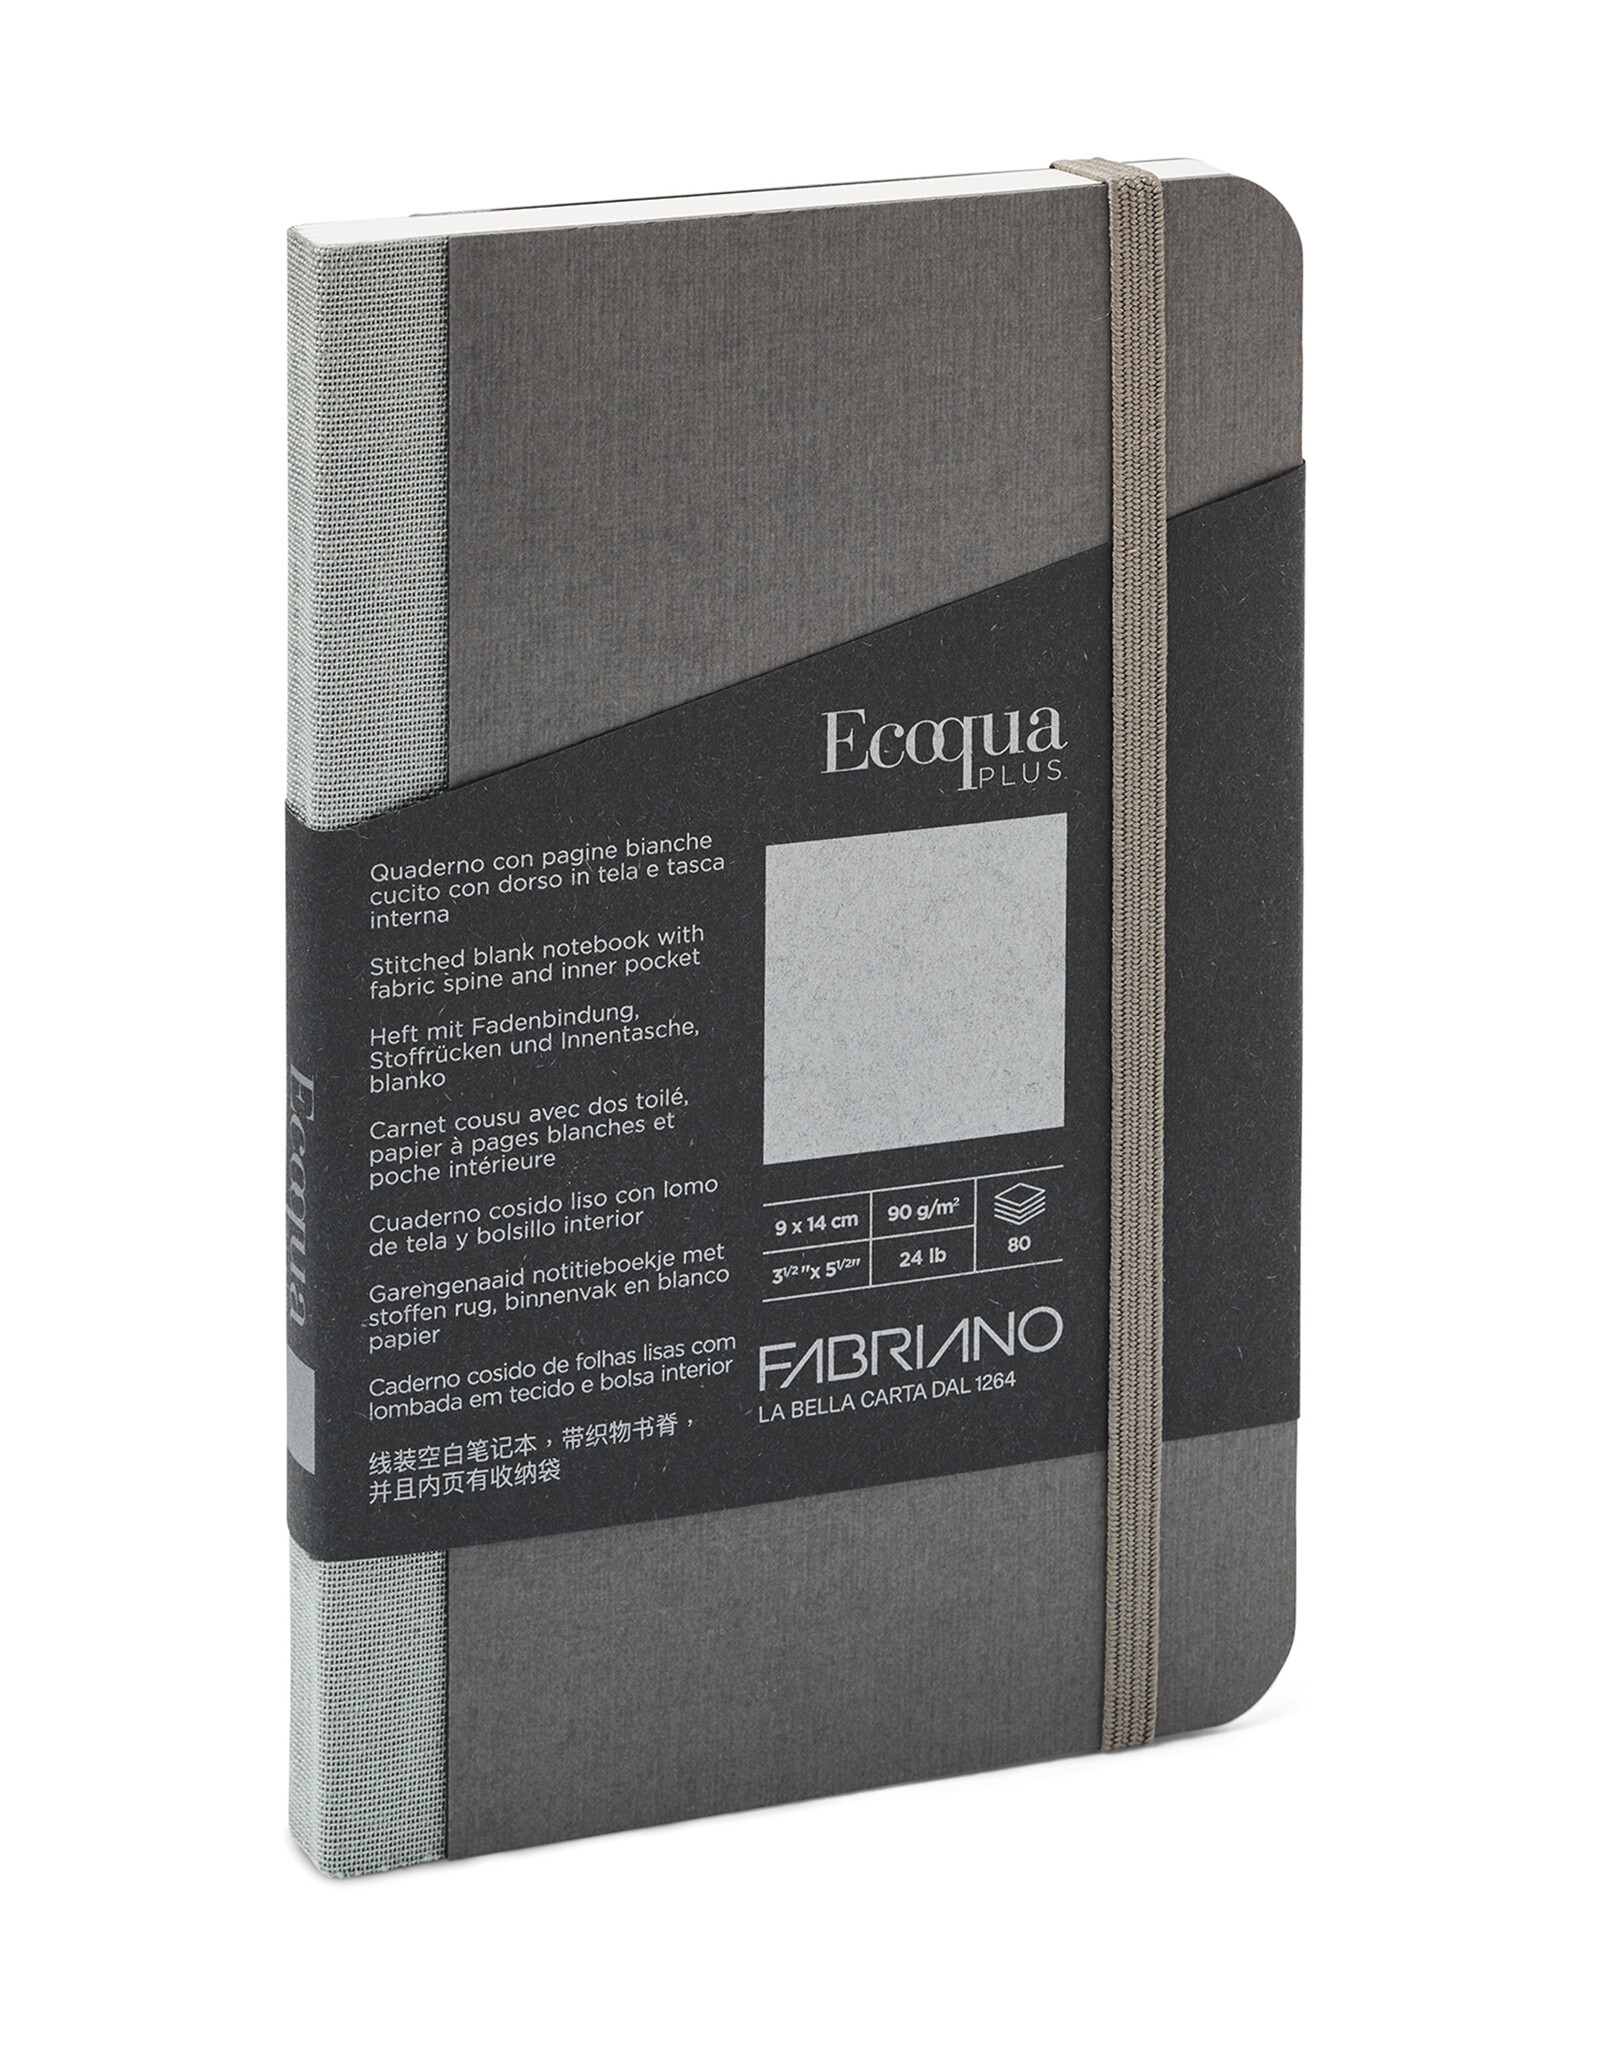 Ecoqua Plus Fabric Bound Notebook, Grey, 3.5” x 5.5”, Blank